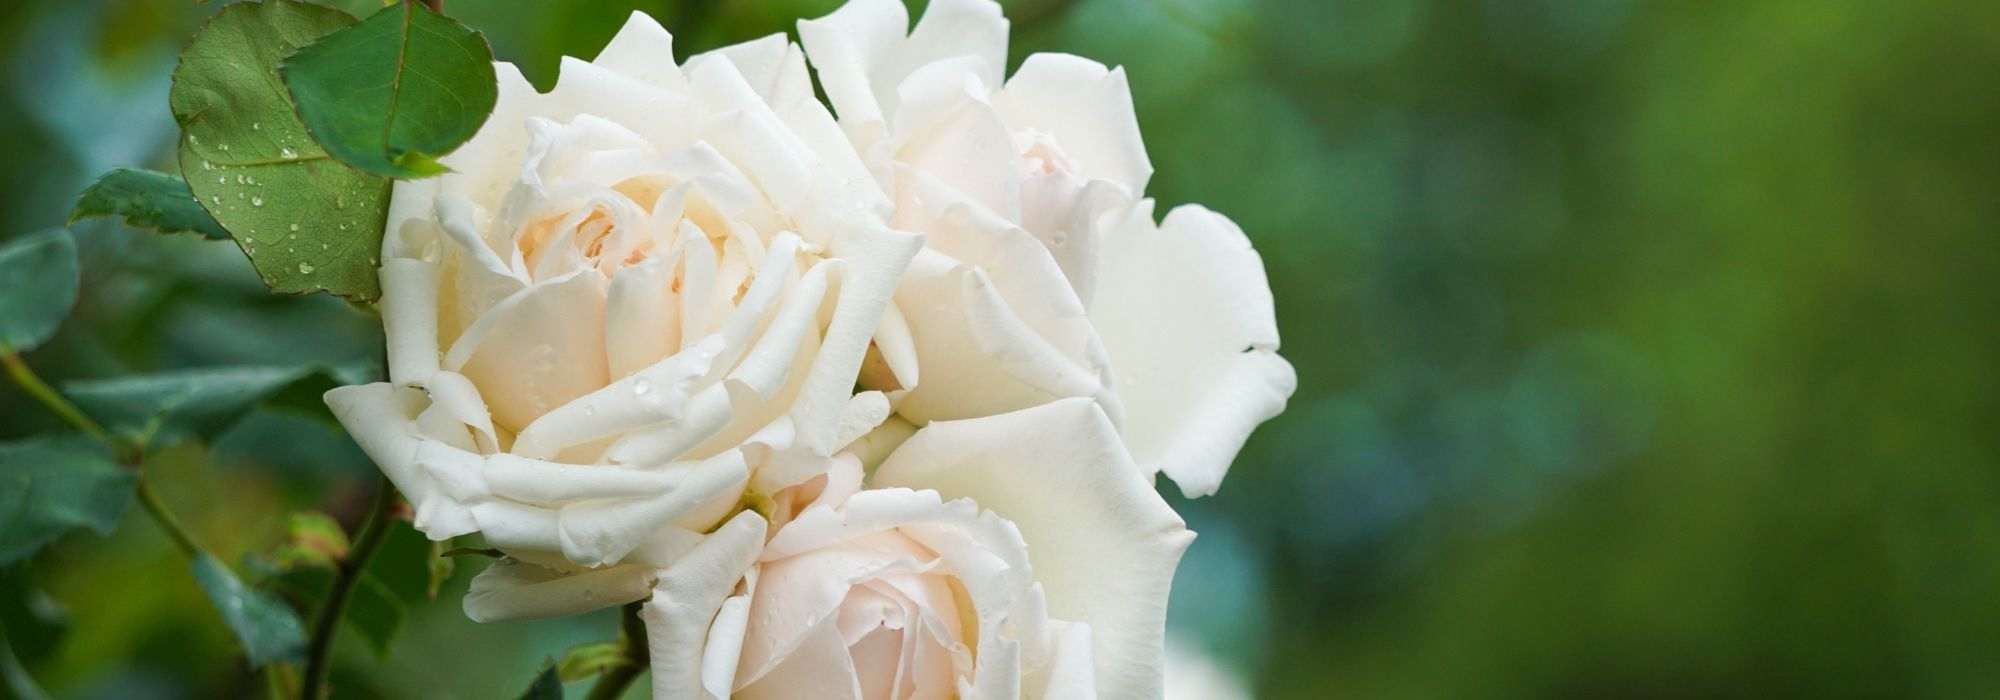 5 rosiers arbustifs à fleurs blanches